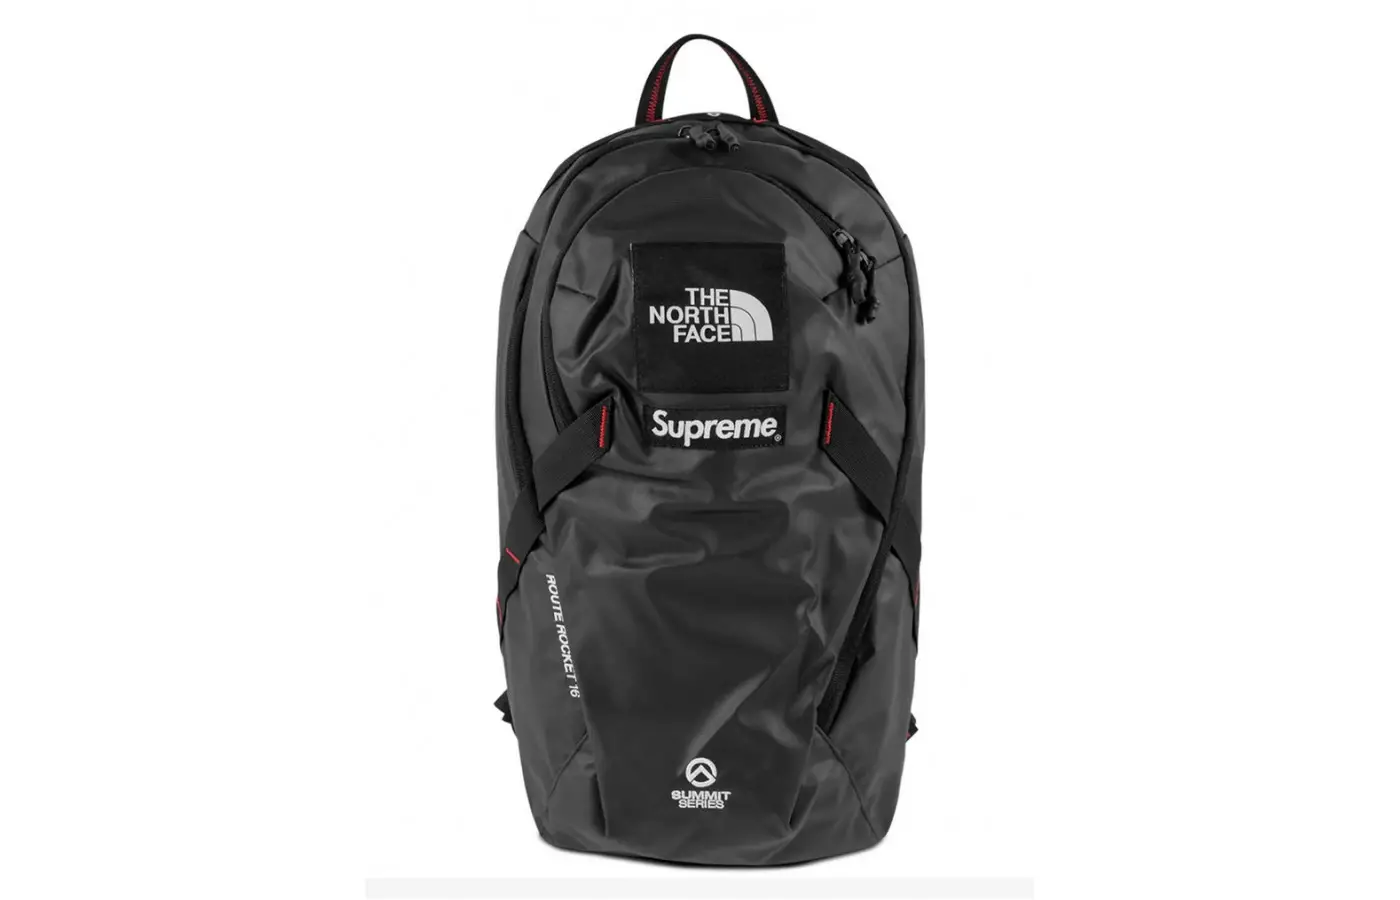 North Face Supreme backpack